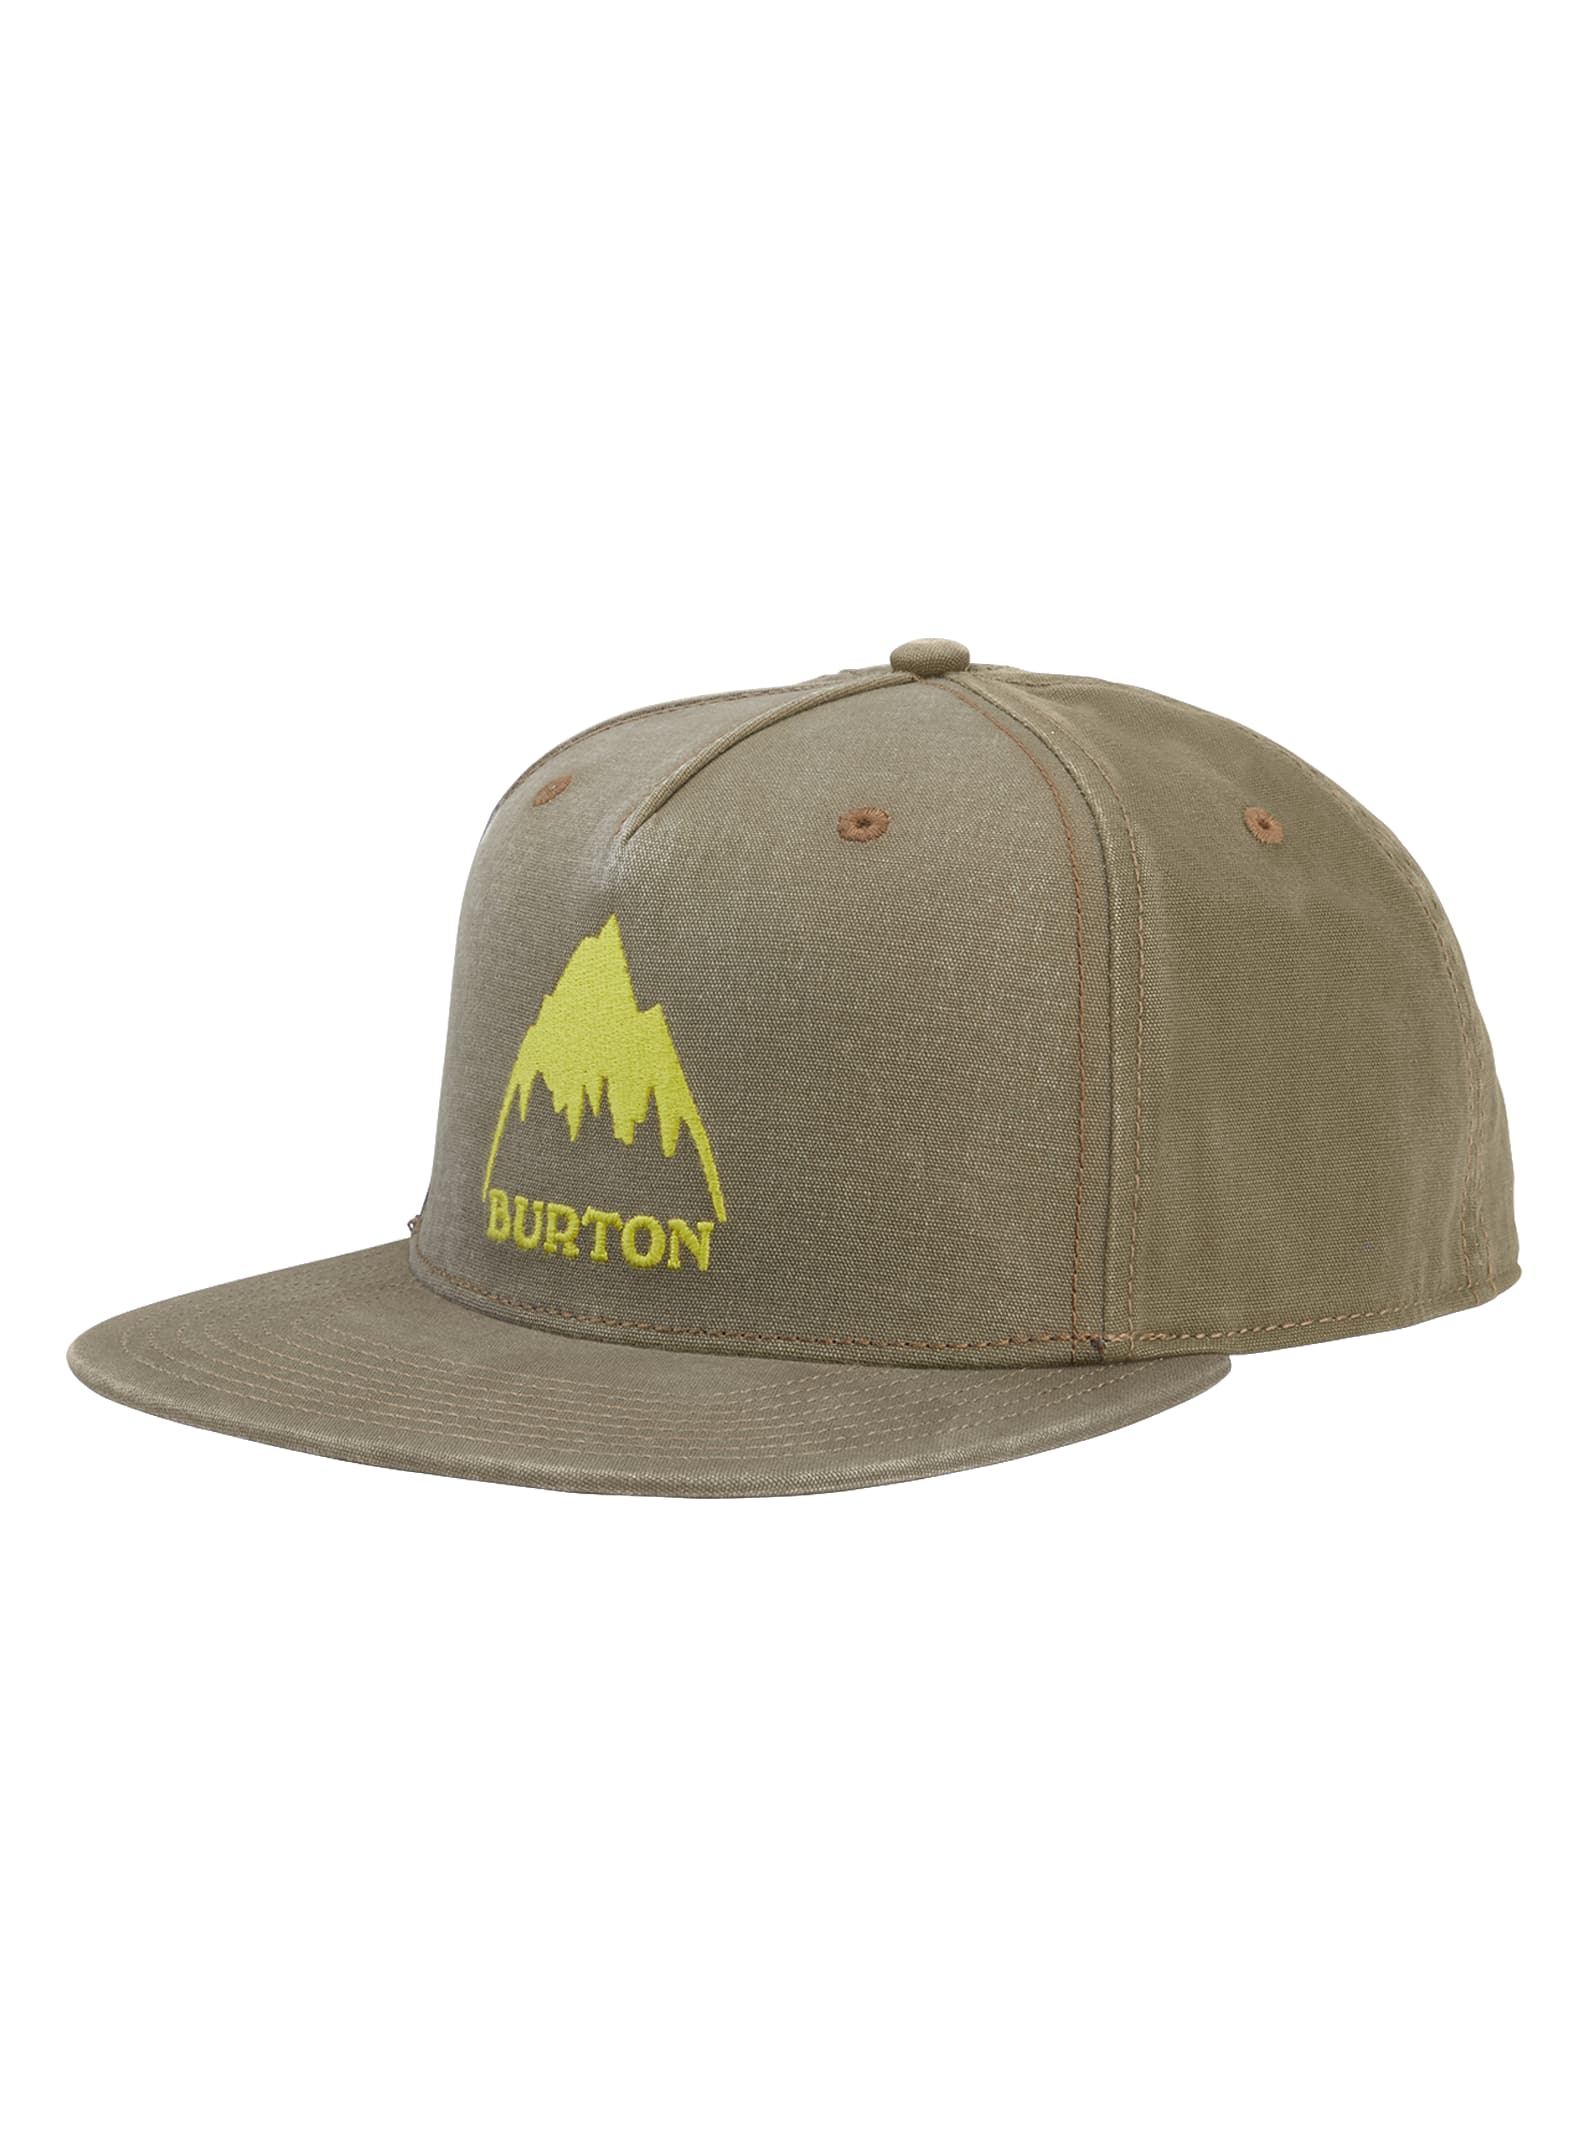 Burton Roustabout Hat | Burton.com Winter 2021 US